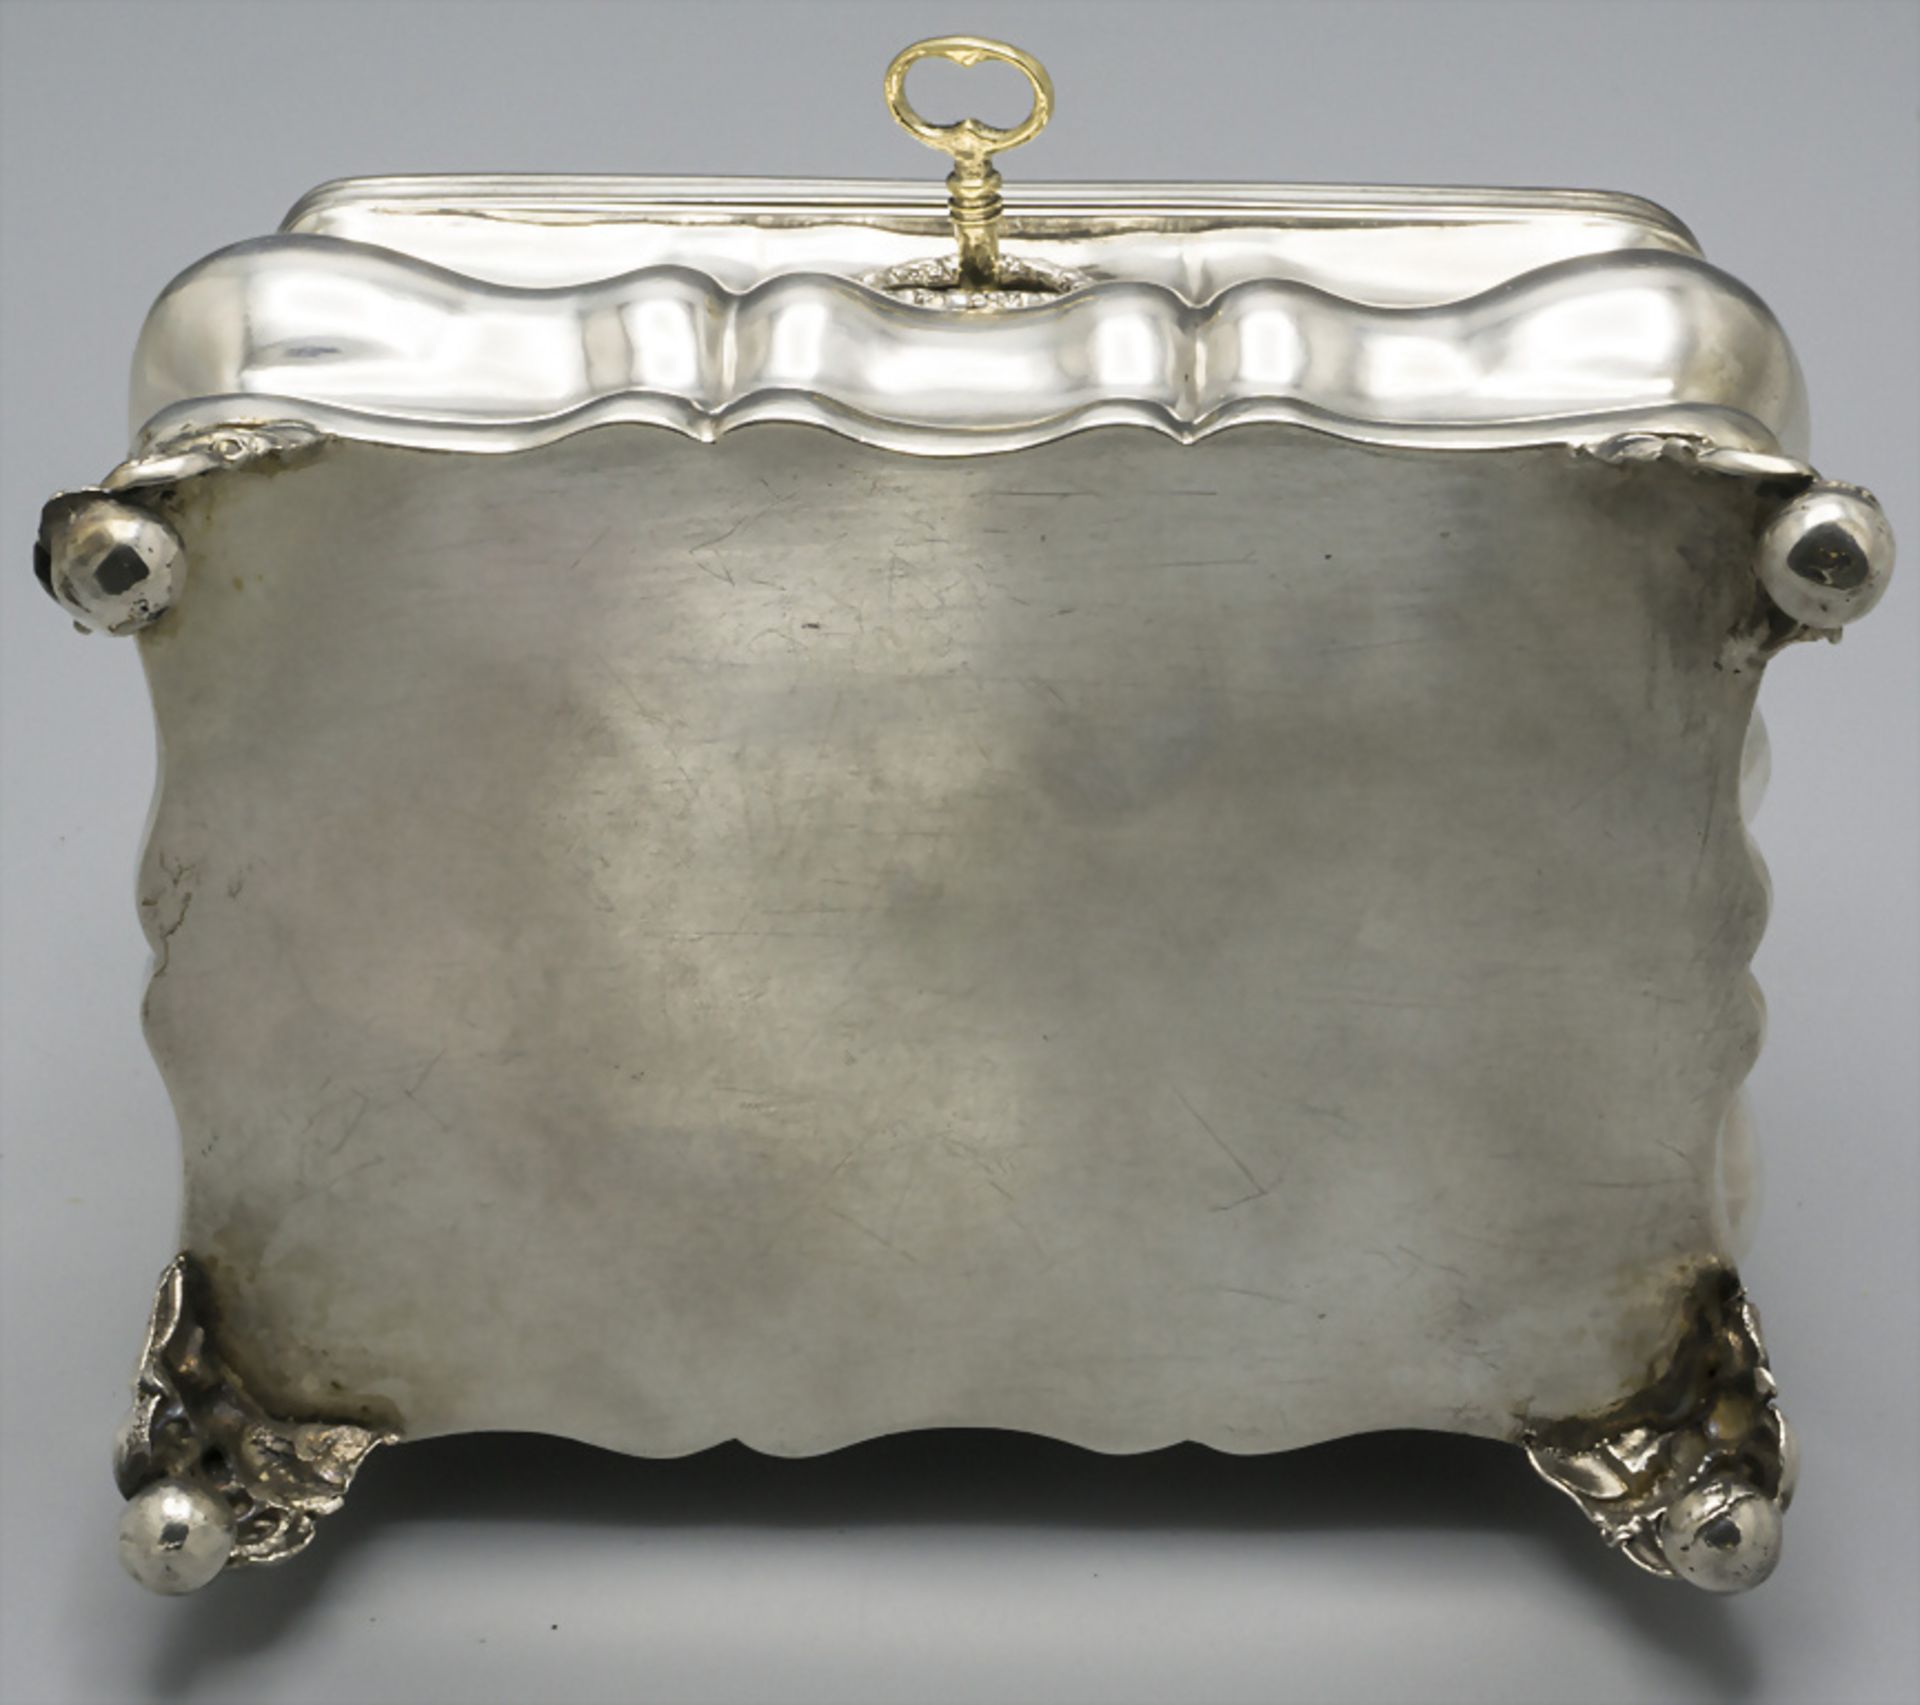 Biedermeier Zuckerdose / A silver Biedermeier sugar bowl, Peter Schima, Wien, um 1847 - Image 5 of 7